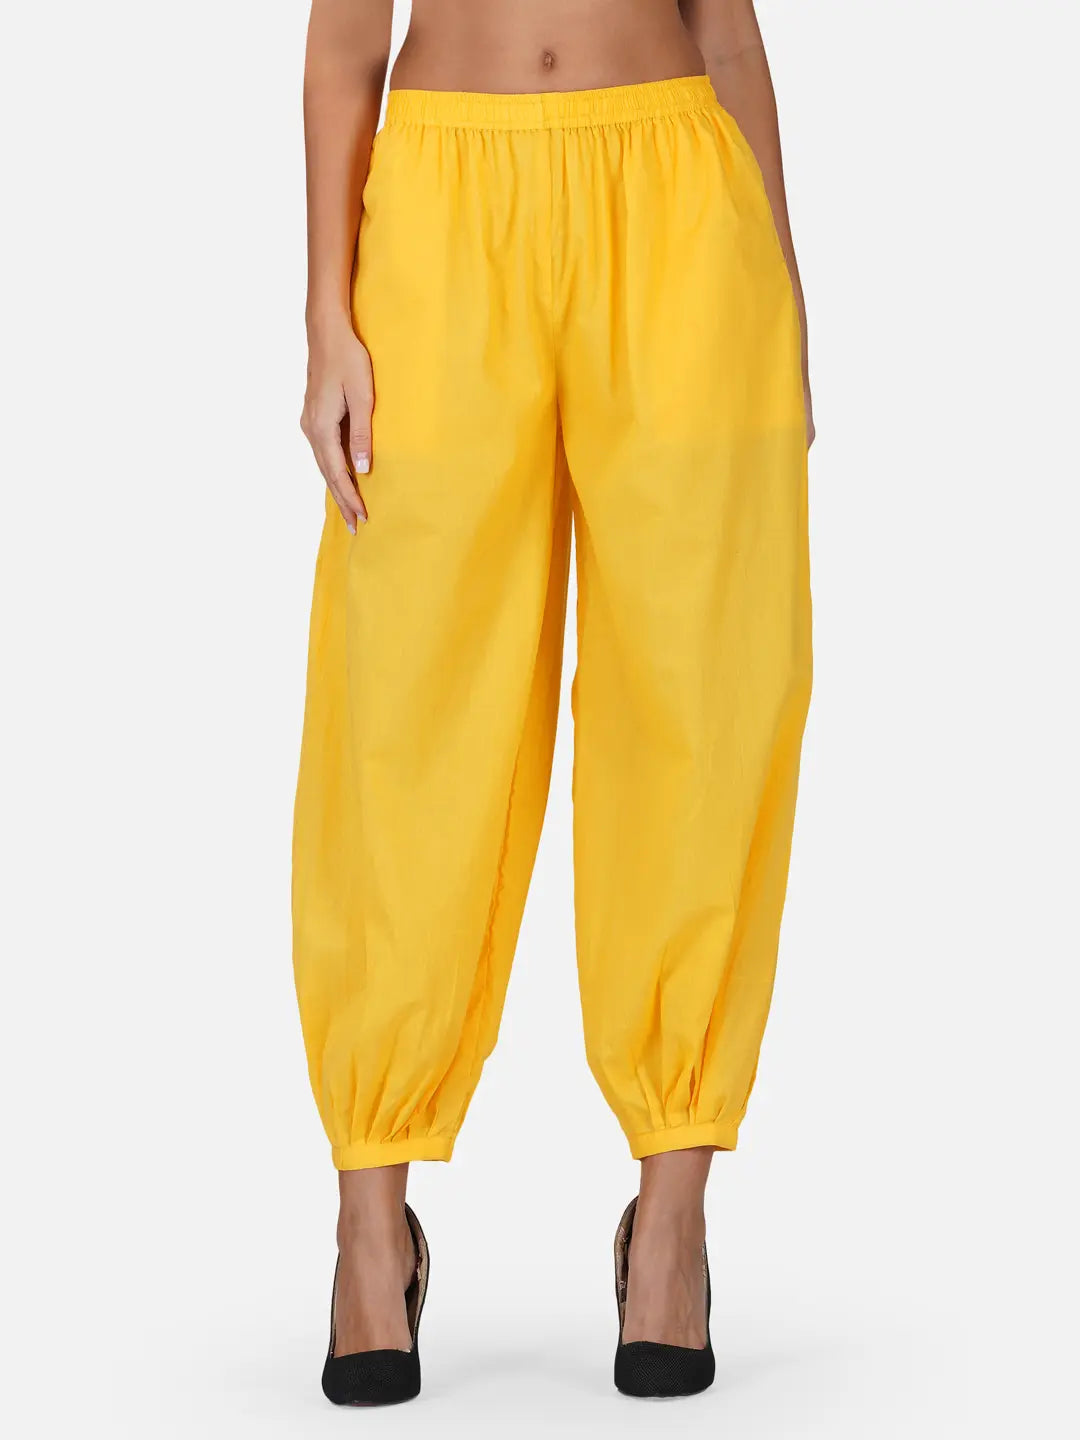 Free People Rumors Textured Harem Pants Yellow White Striped Size 0 Women's  | eBay